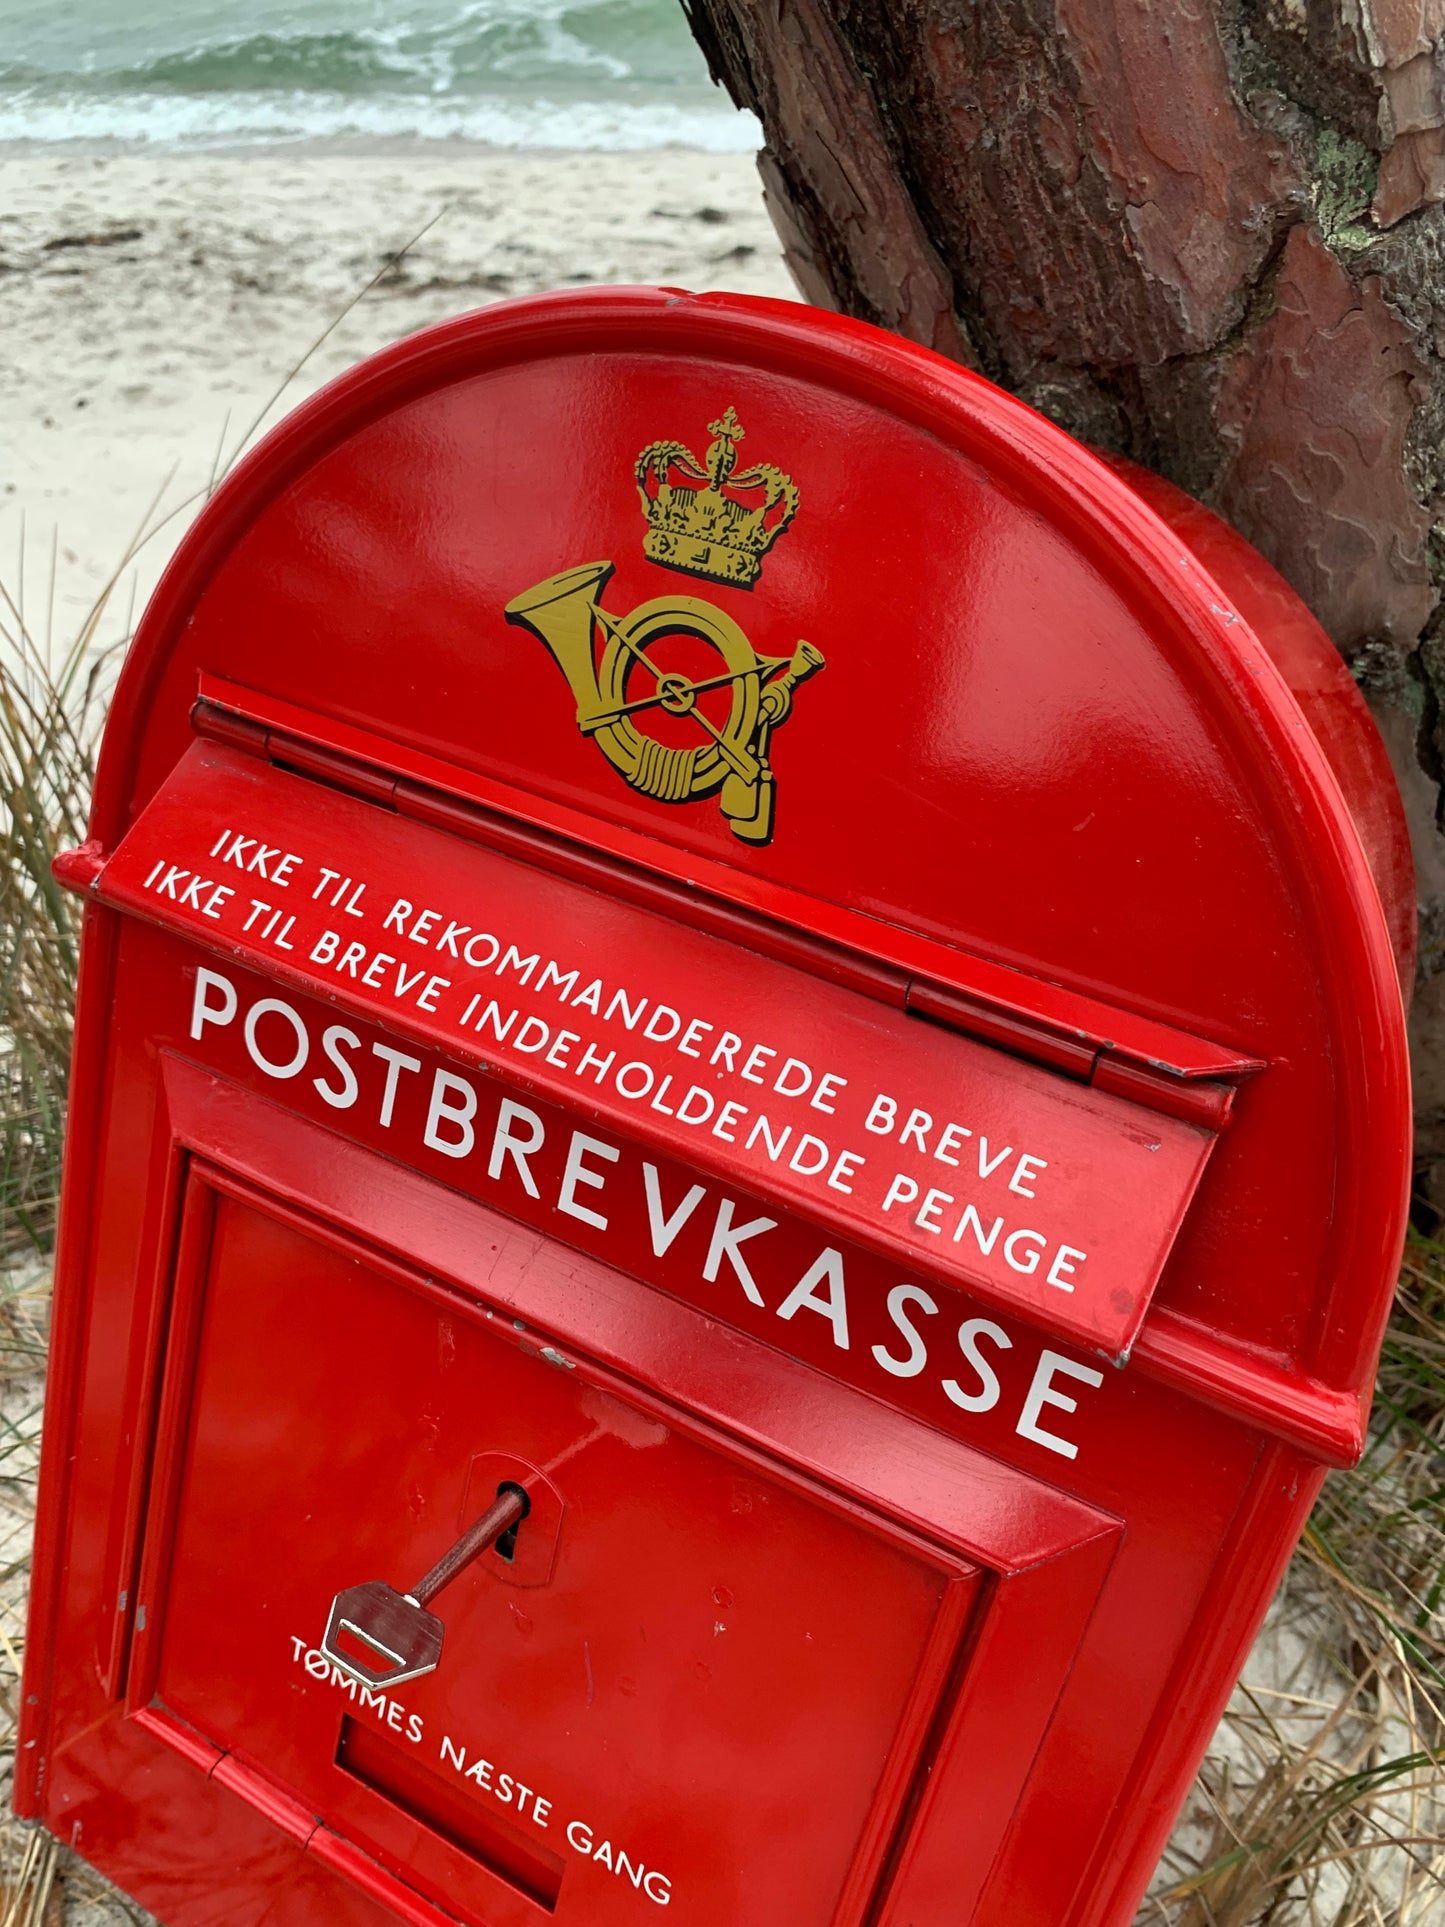 Postkasse - Rød dansk klassiker